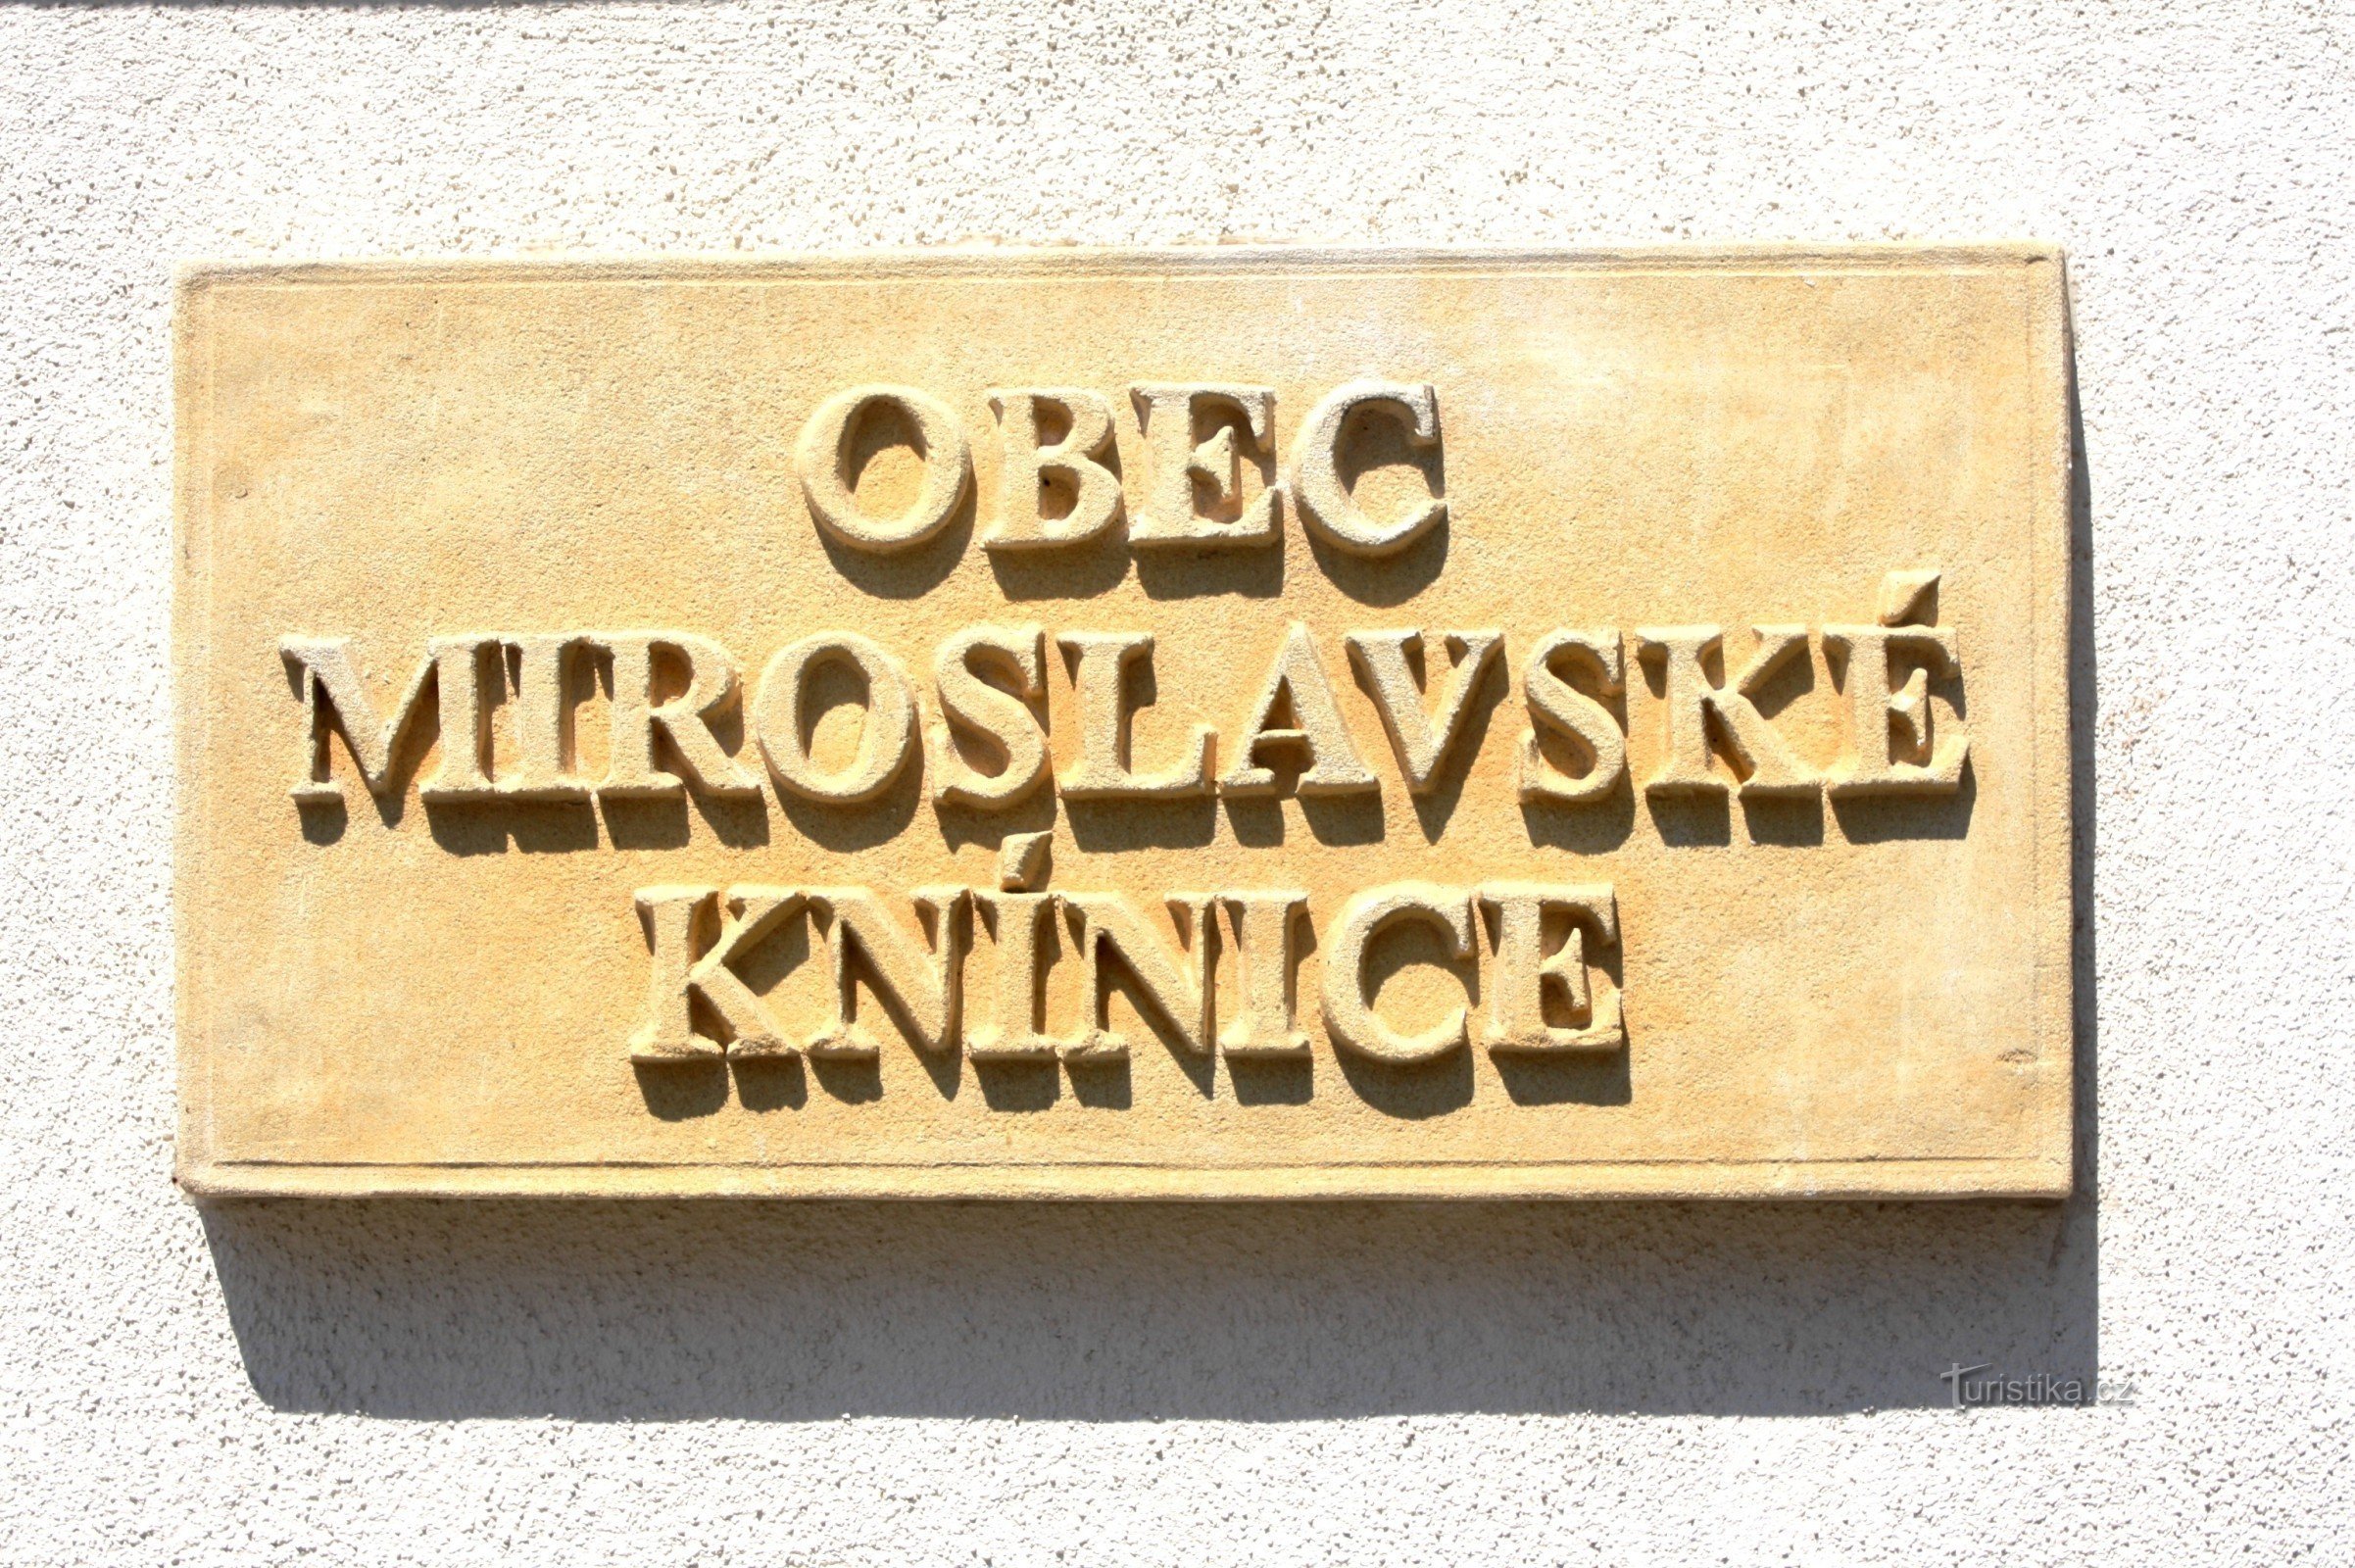 Miroslavské Knínice - se promener dans les attractions du village